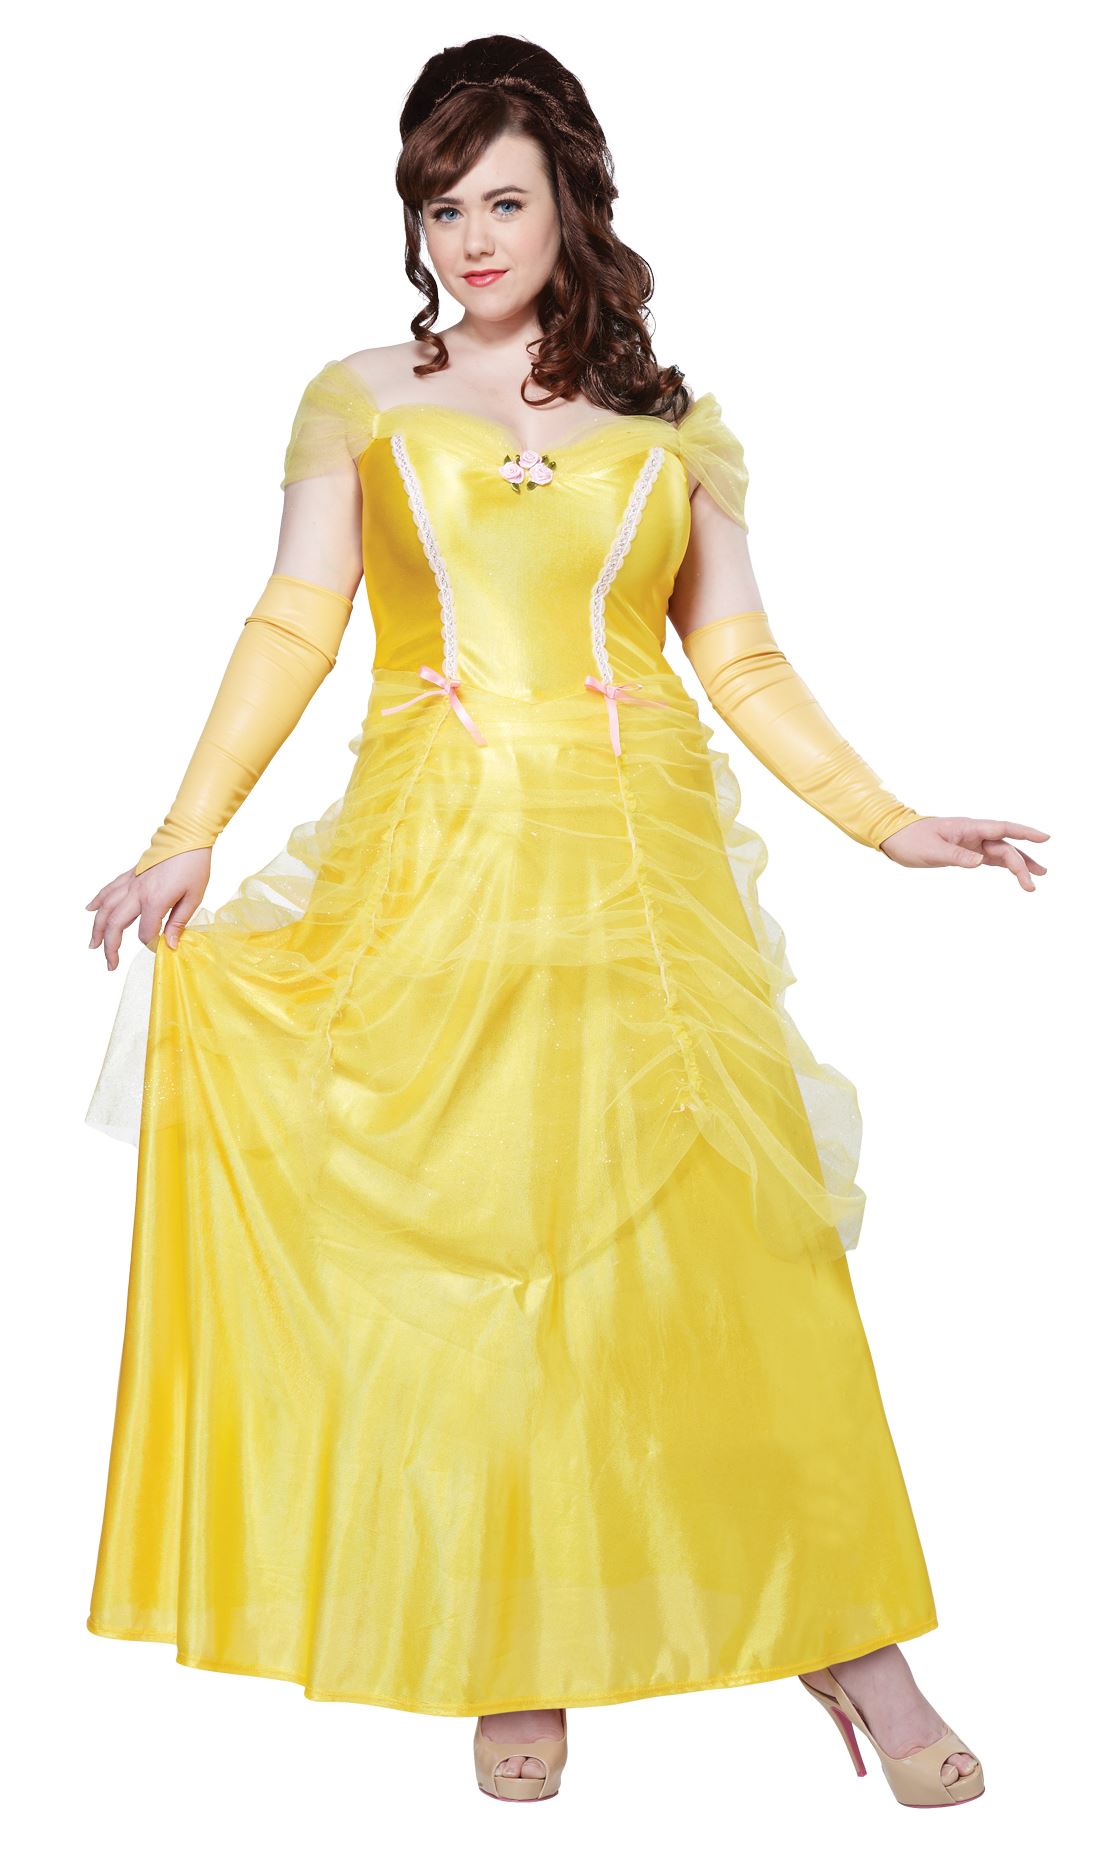 Adult Princess Beauty Women Belle Plus Costume 51.99